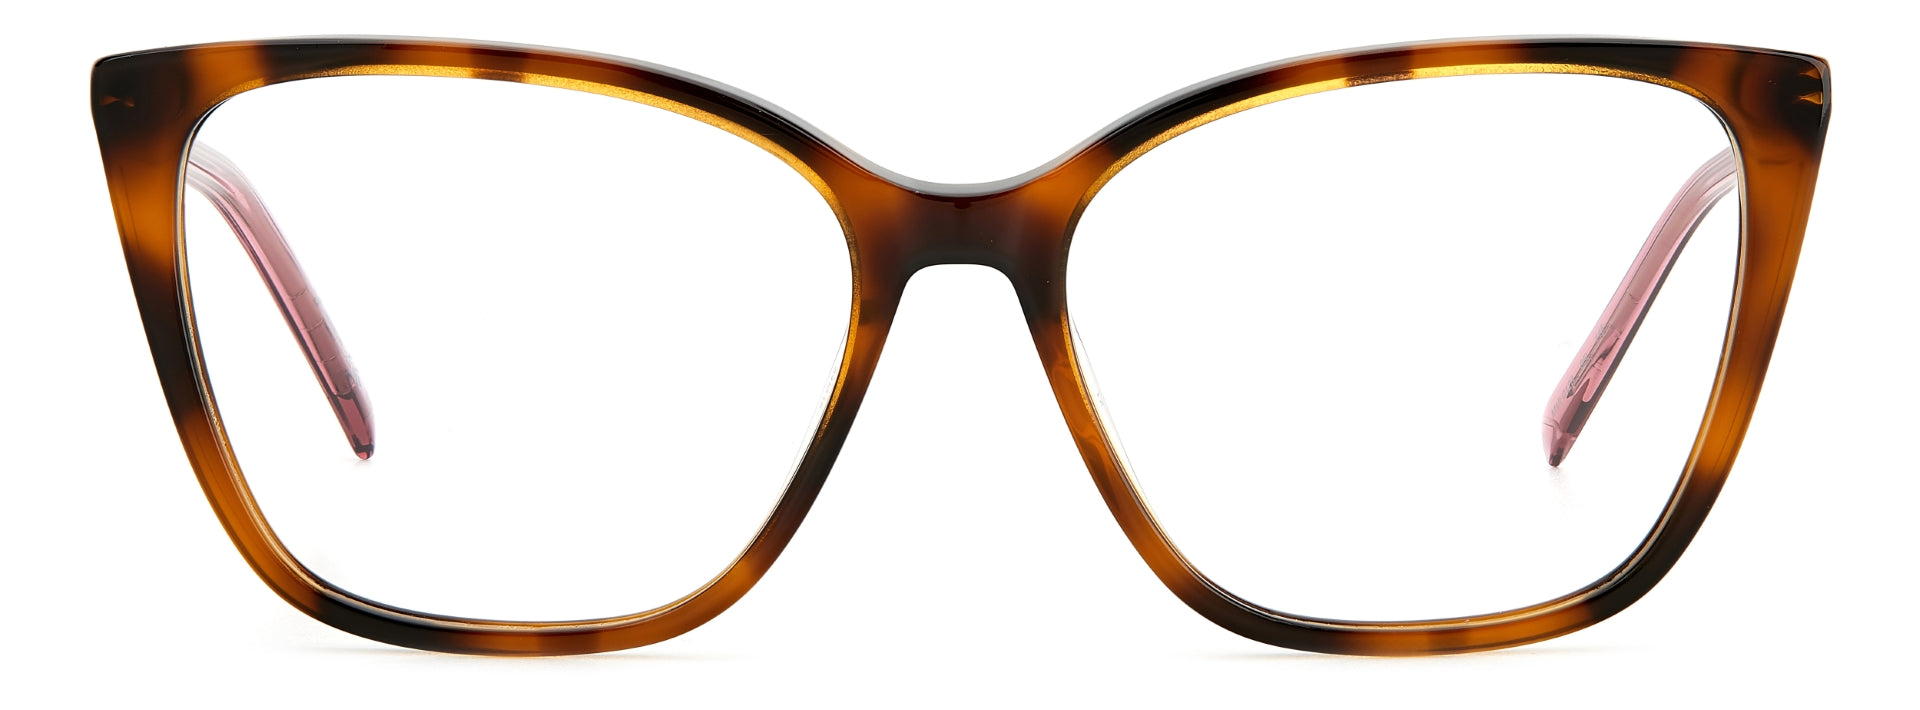 M MISSONI WOMAN SQUARE Eyeglasses-MMI 0123 Size 54